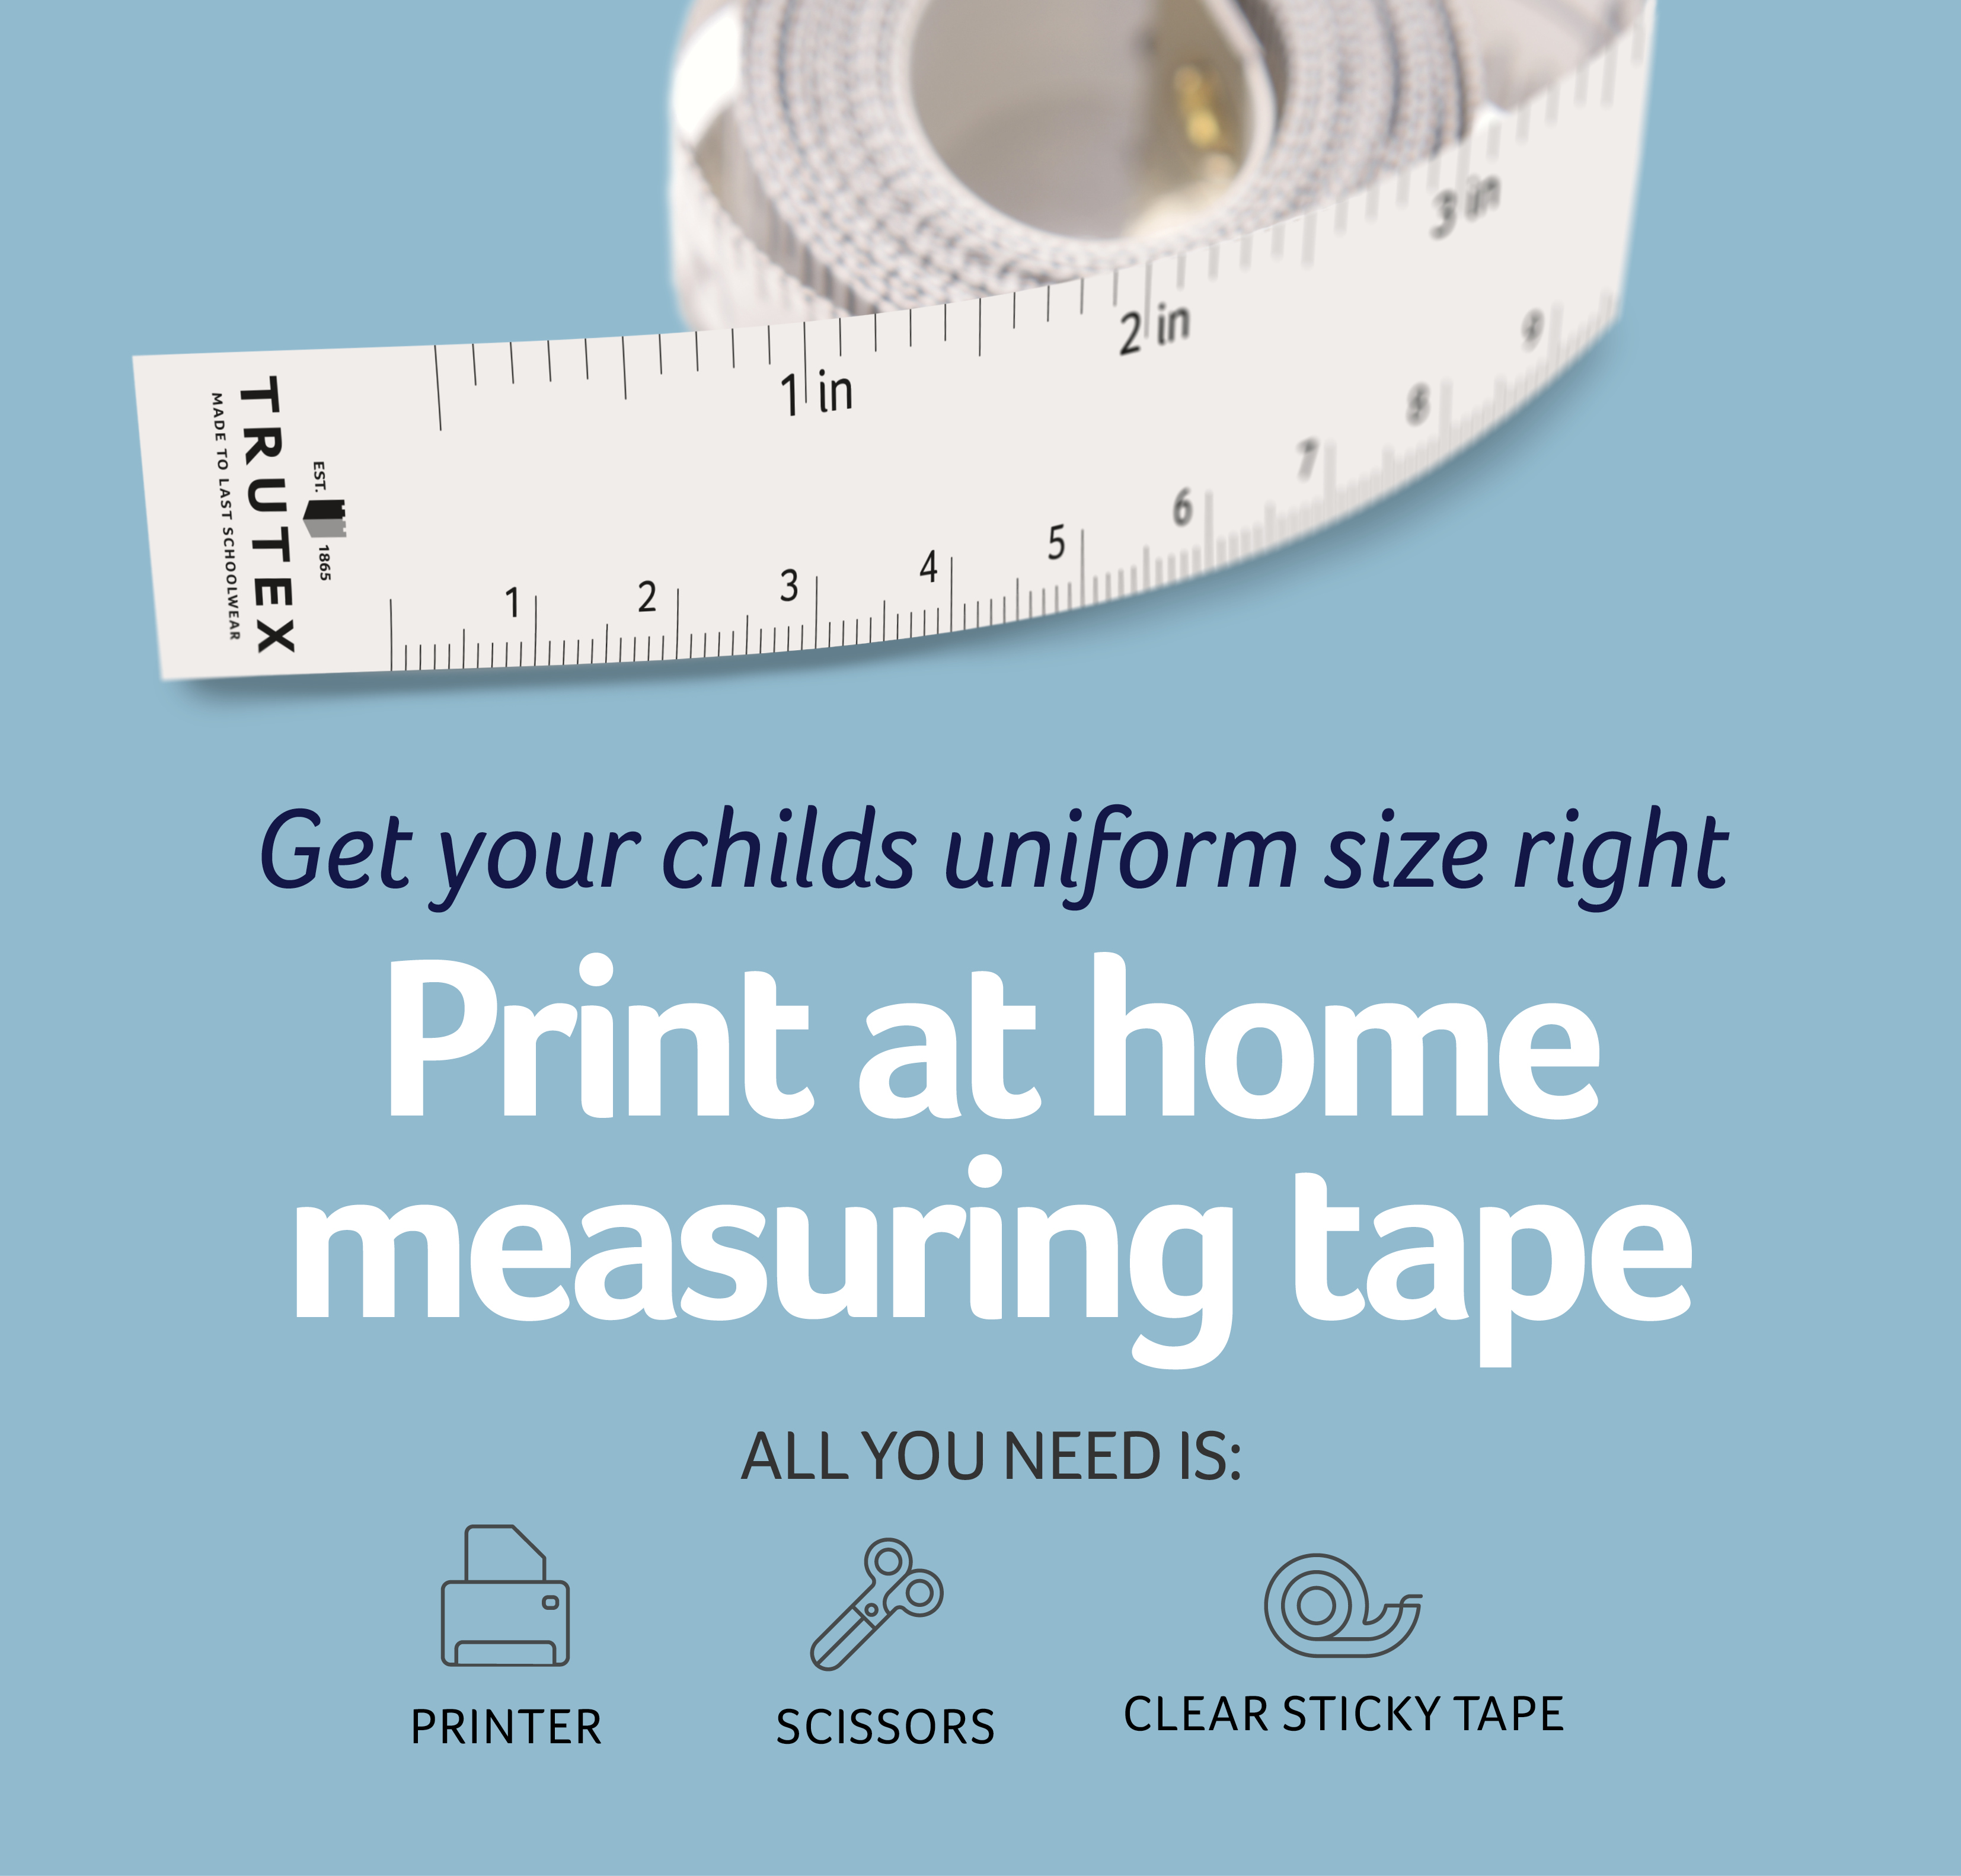 Print at home measuring tape